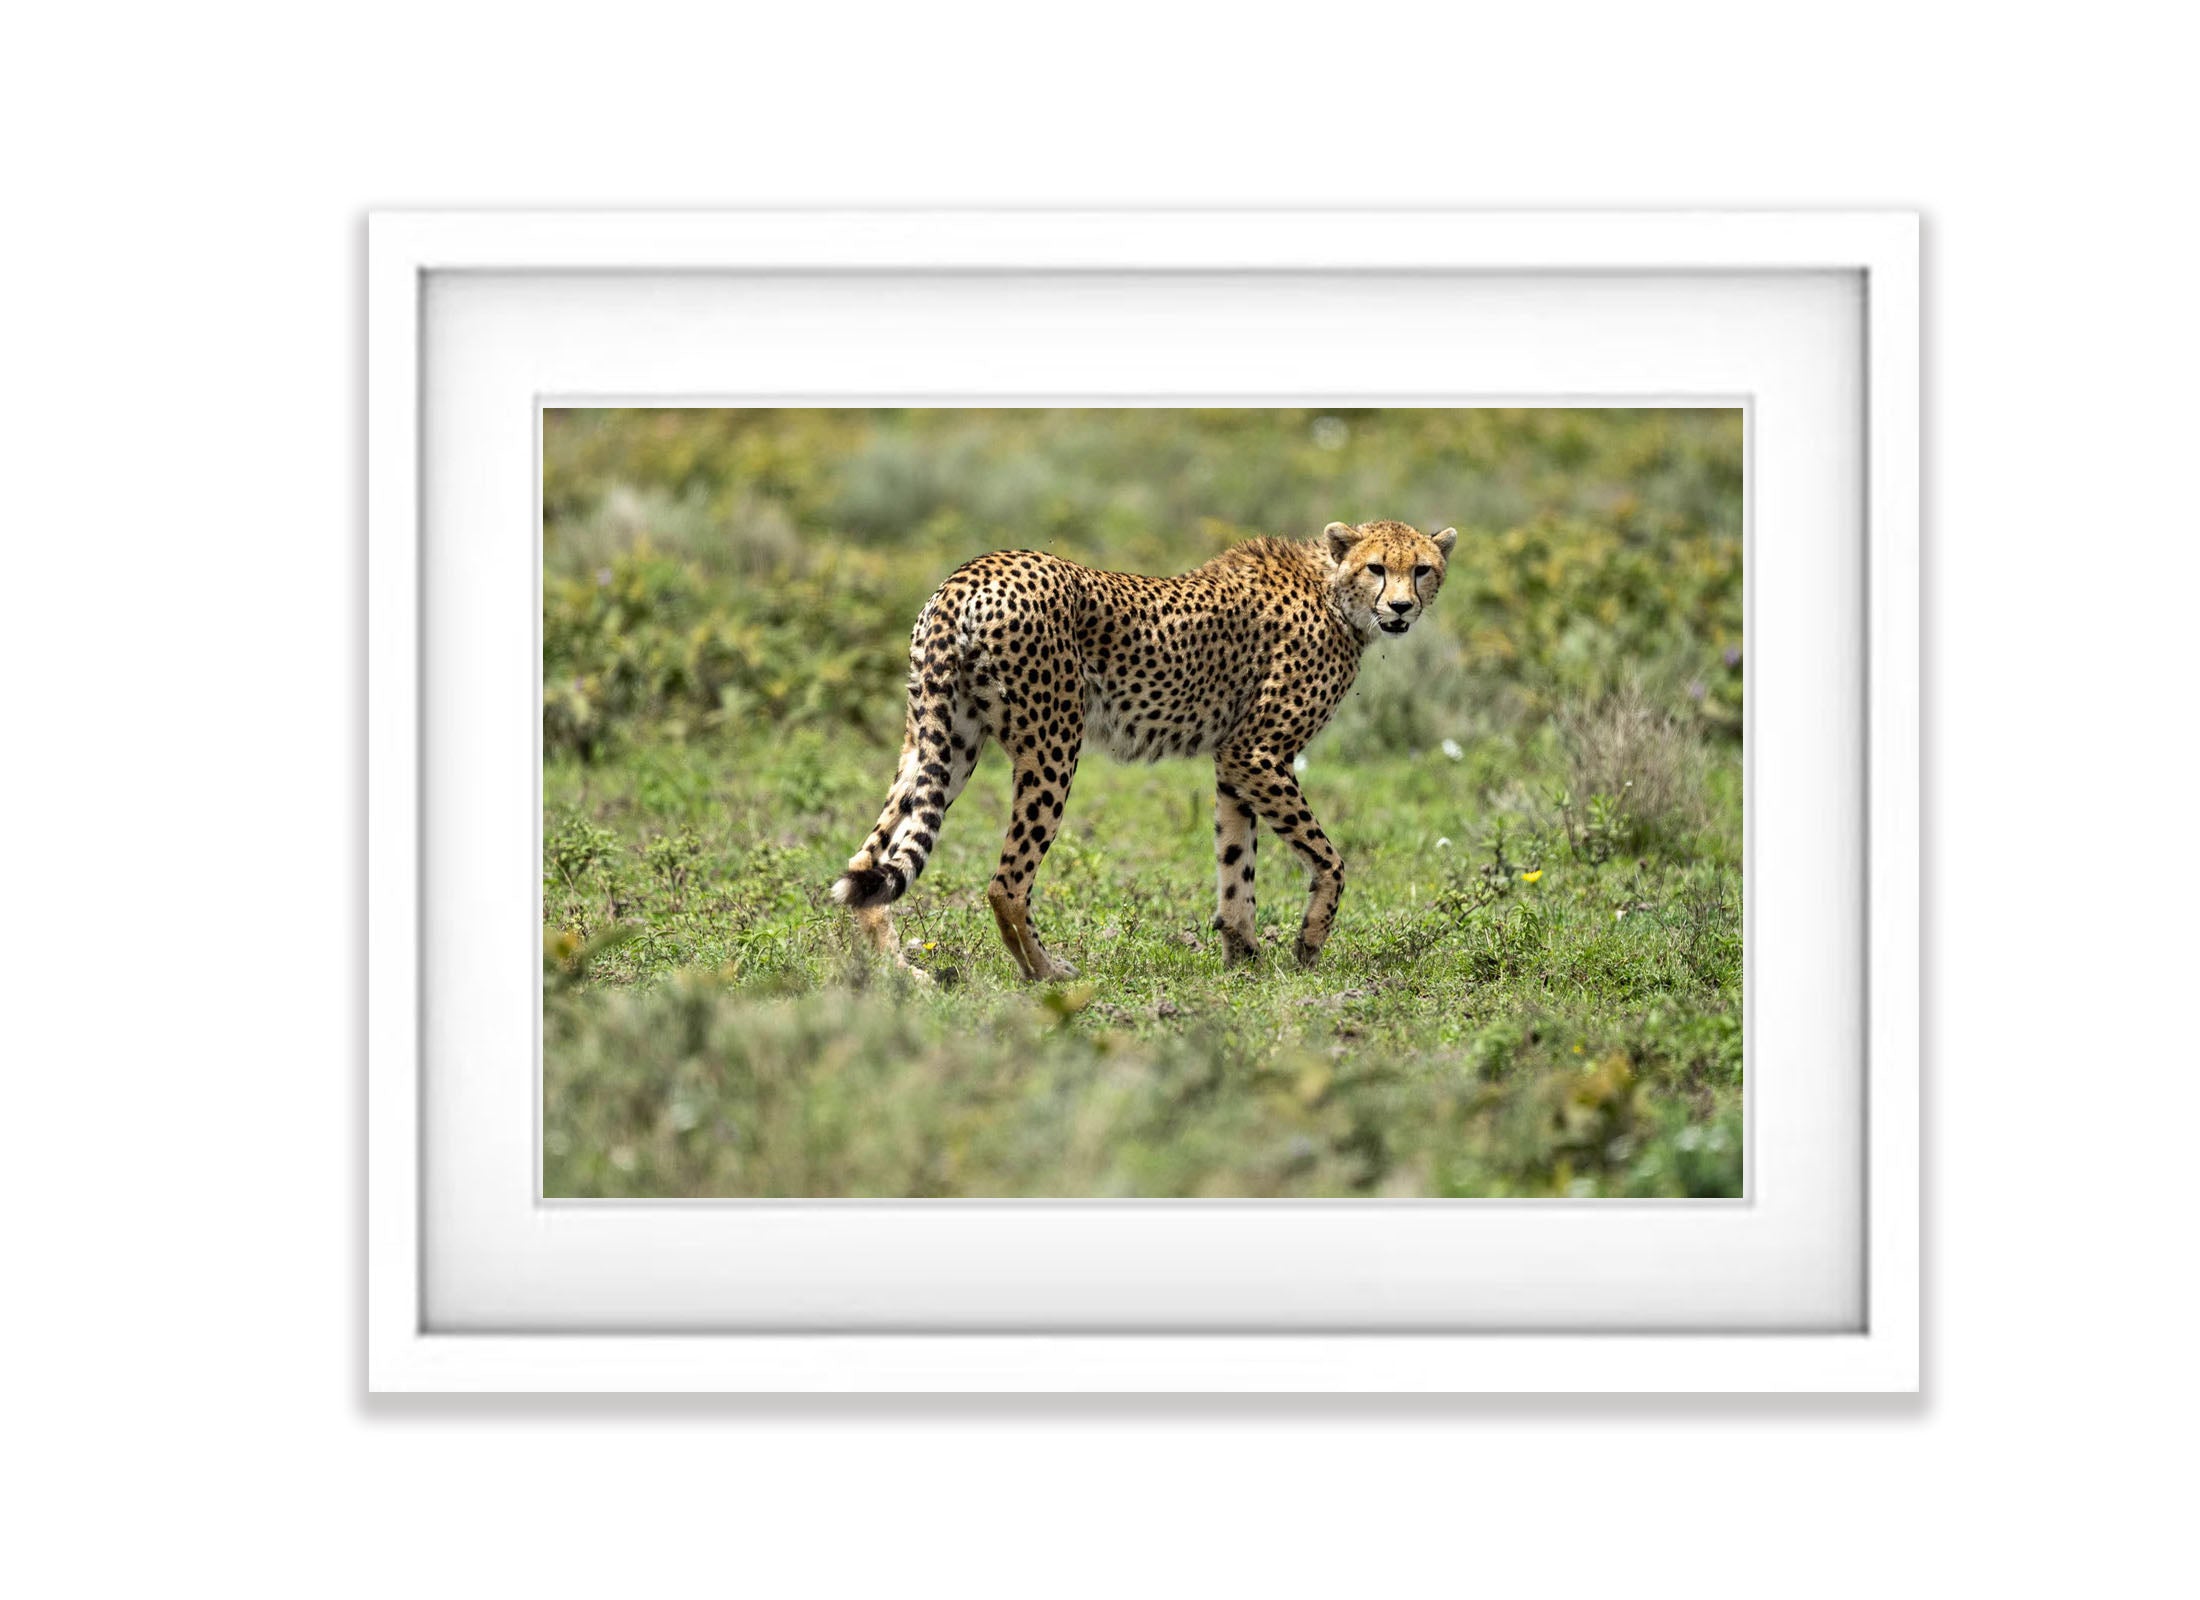 Cheetah on the prowl, Serengeti, Tanzania